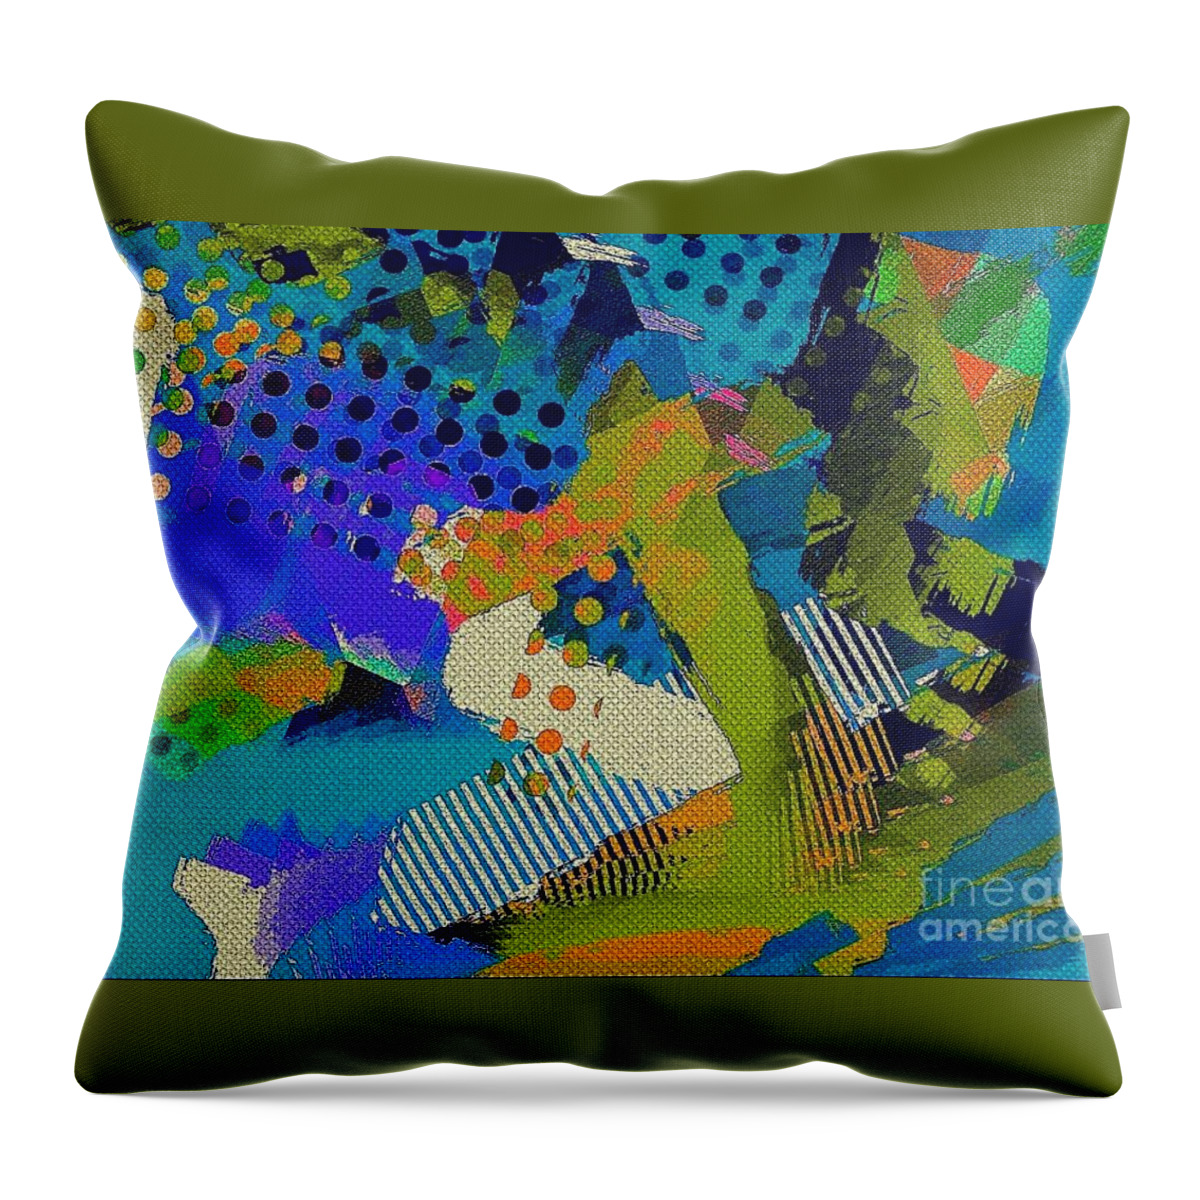 Abstract Throw Pillow featuring the digital art Reef by Cooky Goldblatt